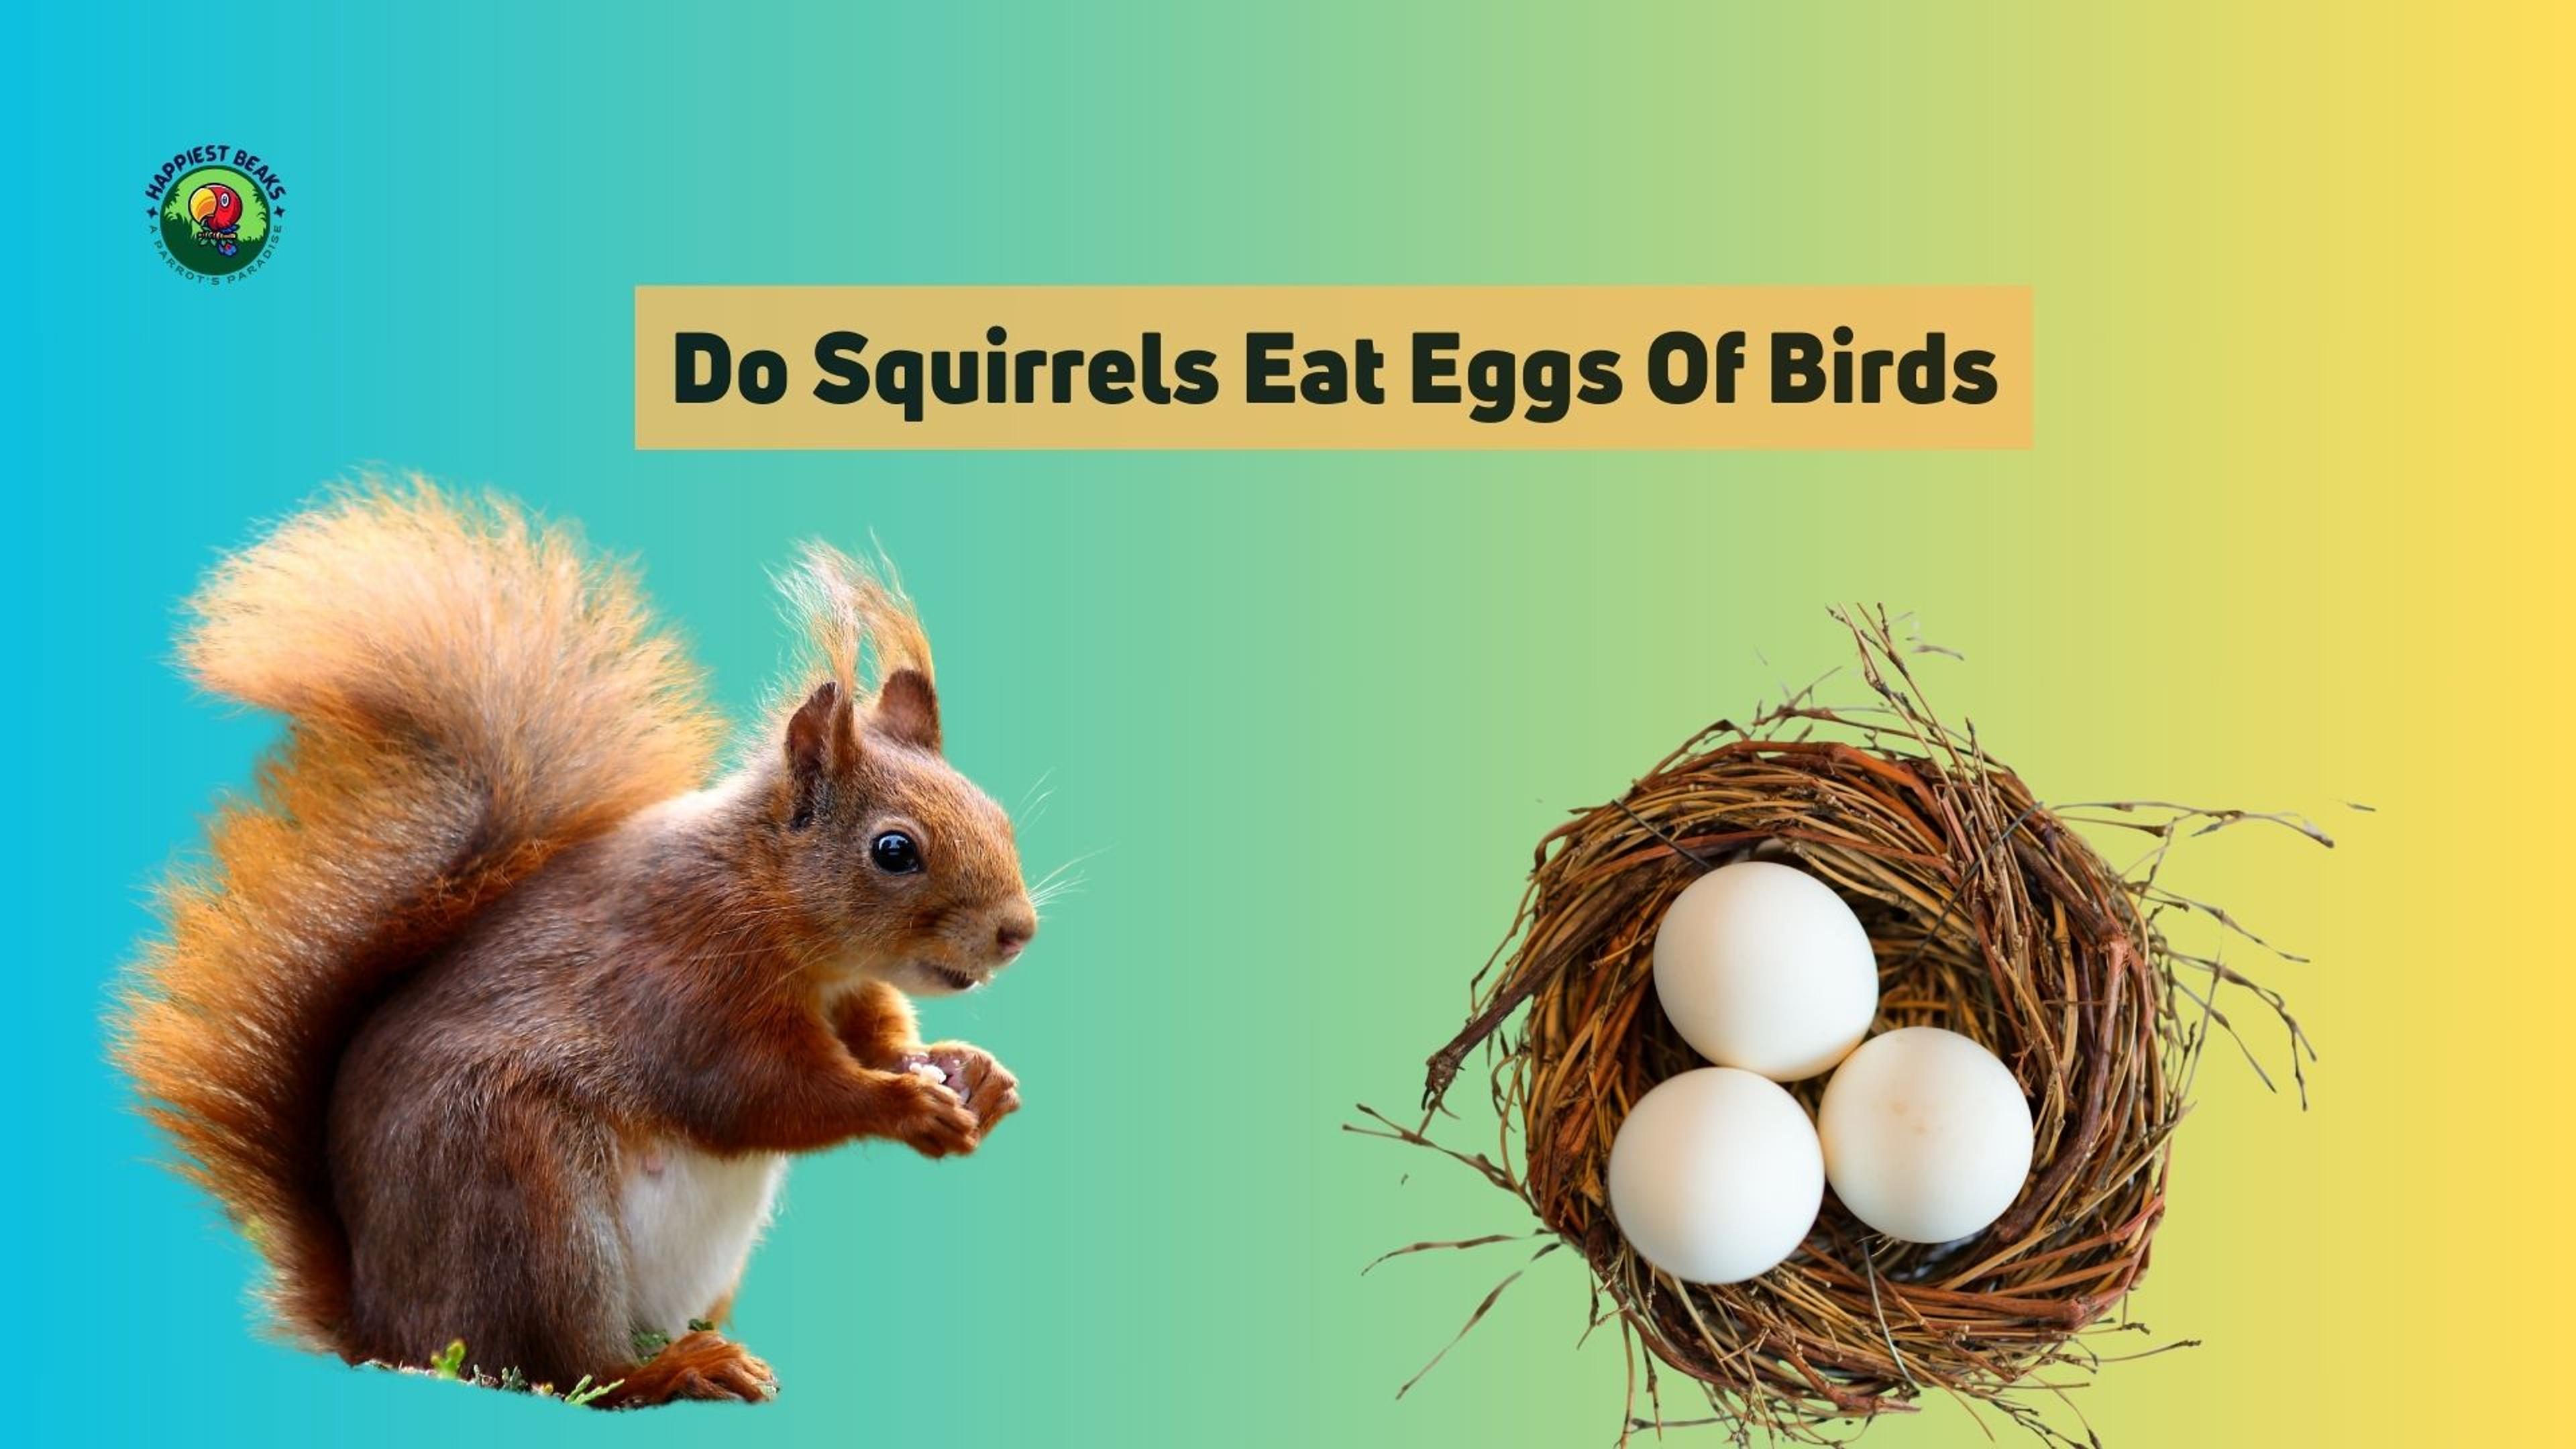 Do Squirrels Eat Eggs of Birds